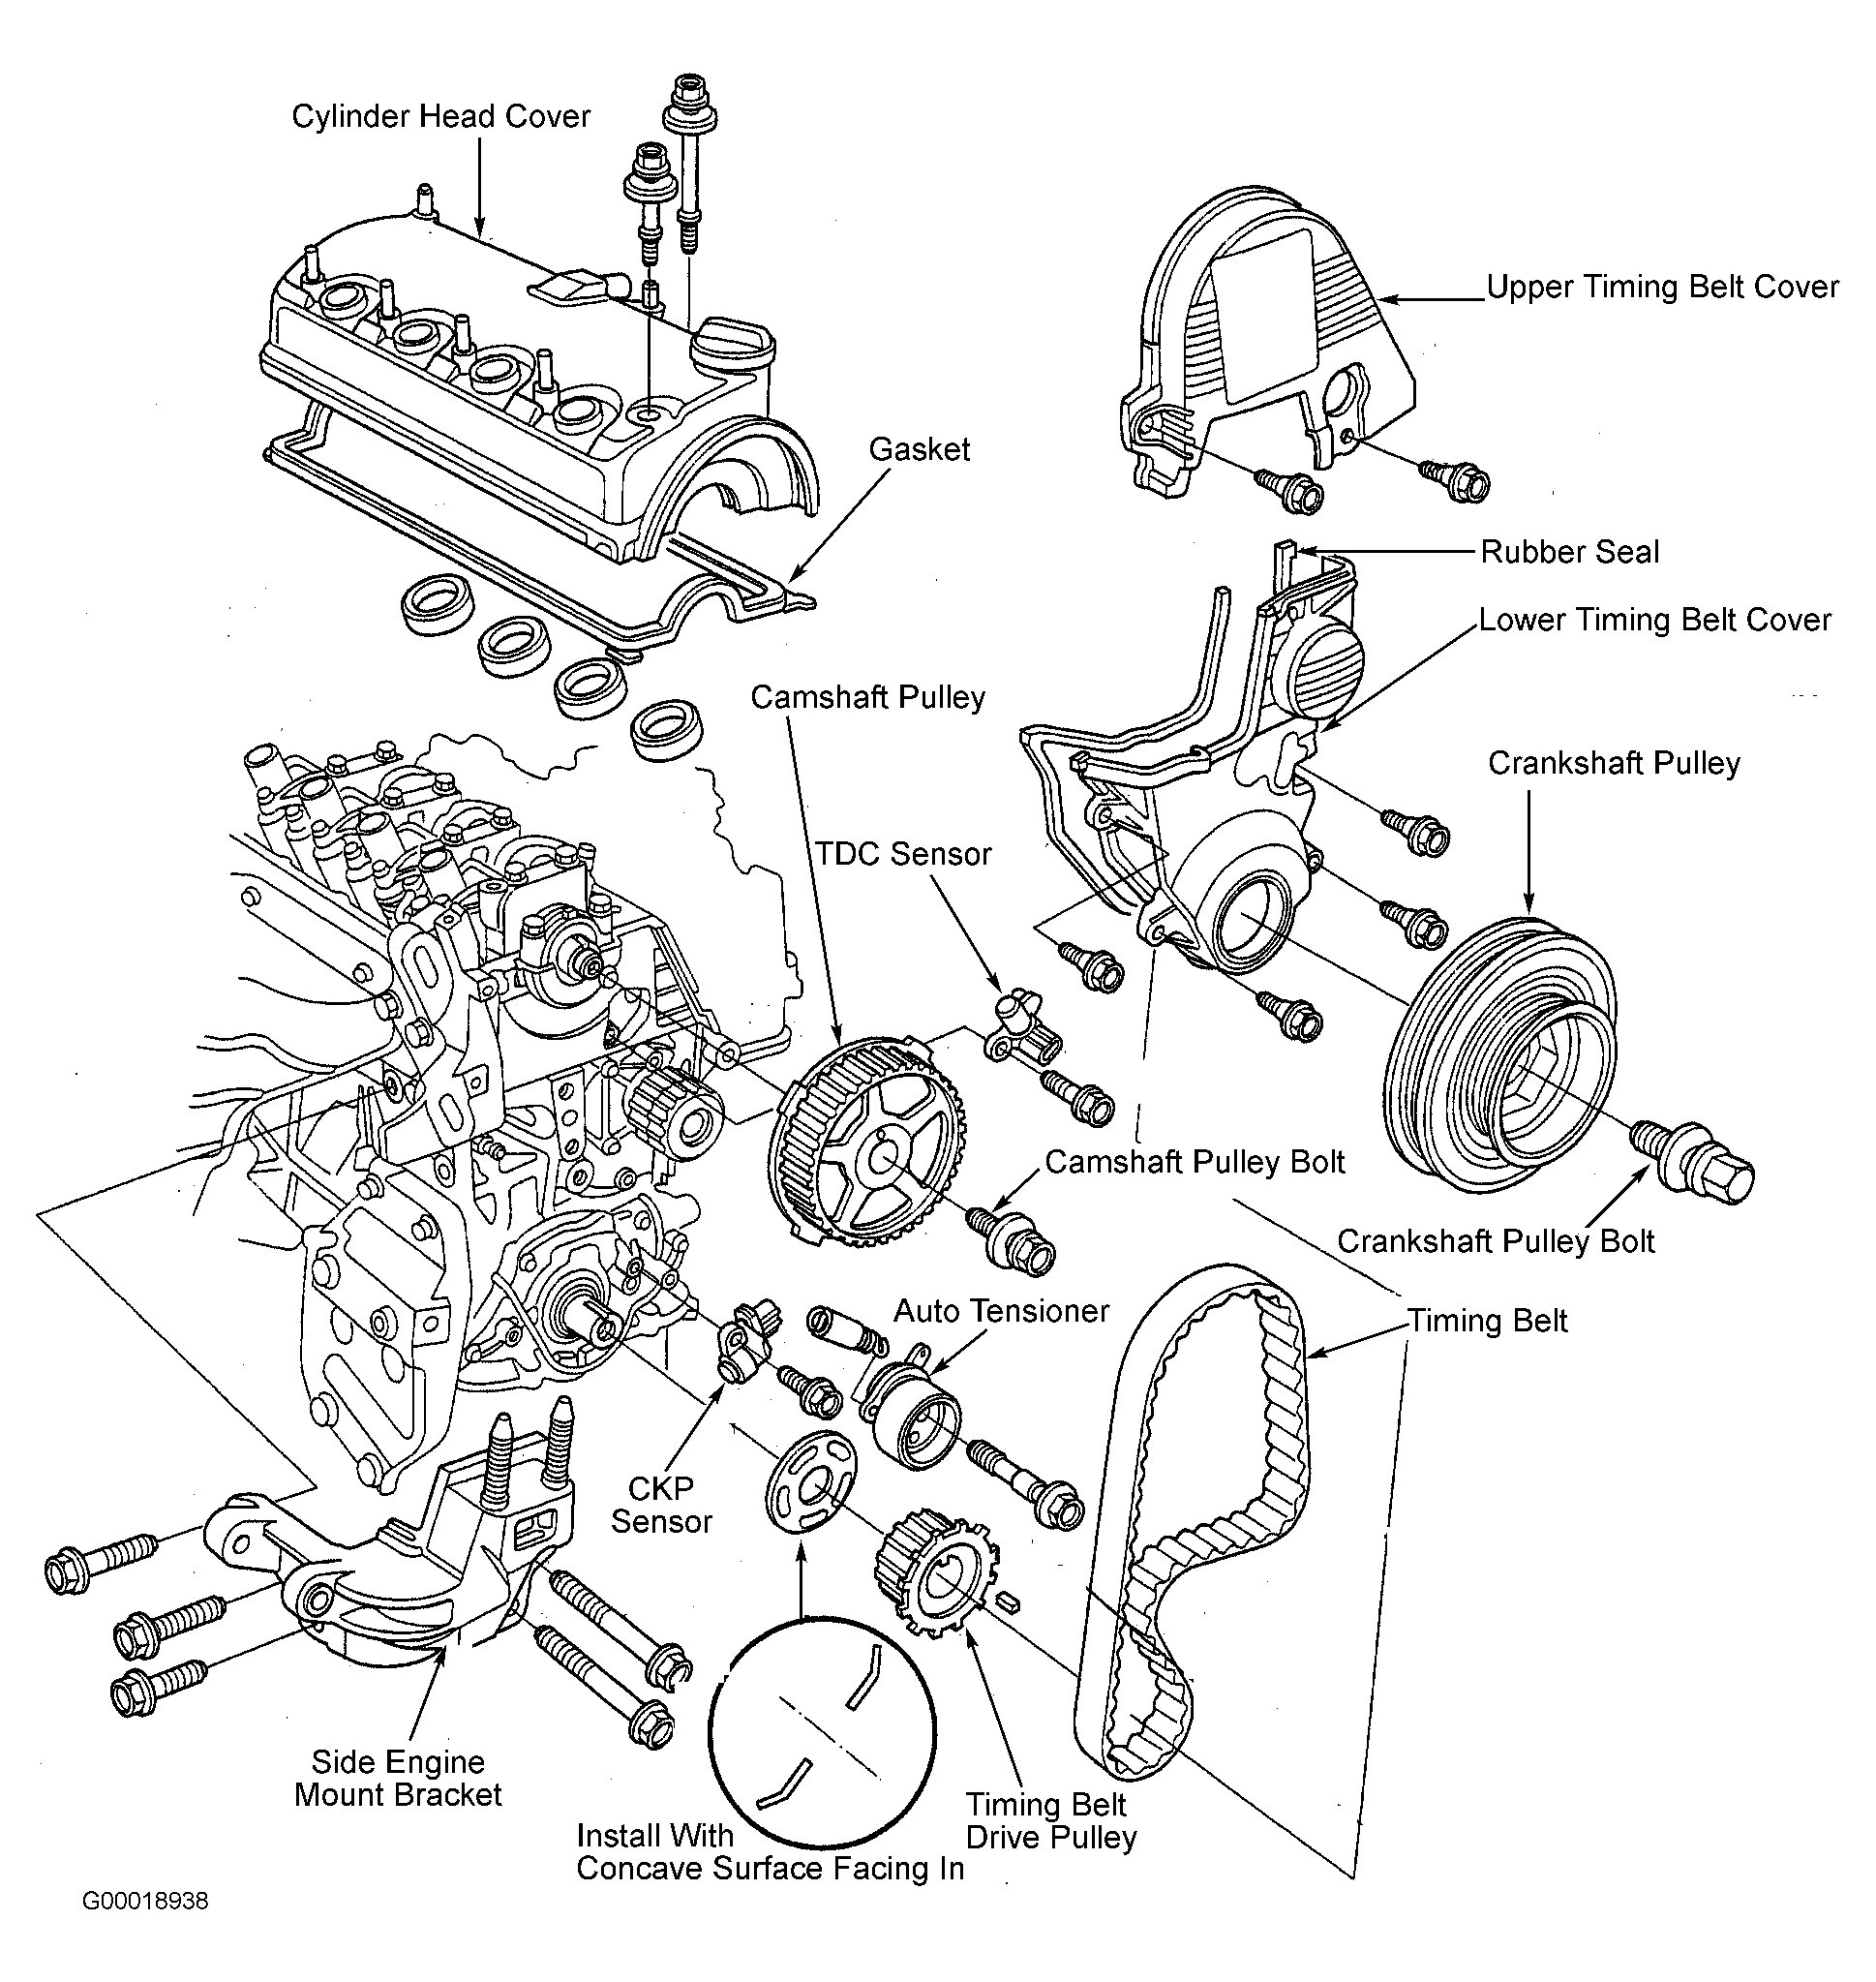 2003 Chevy Trailblazer Parts Diagram